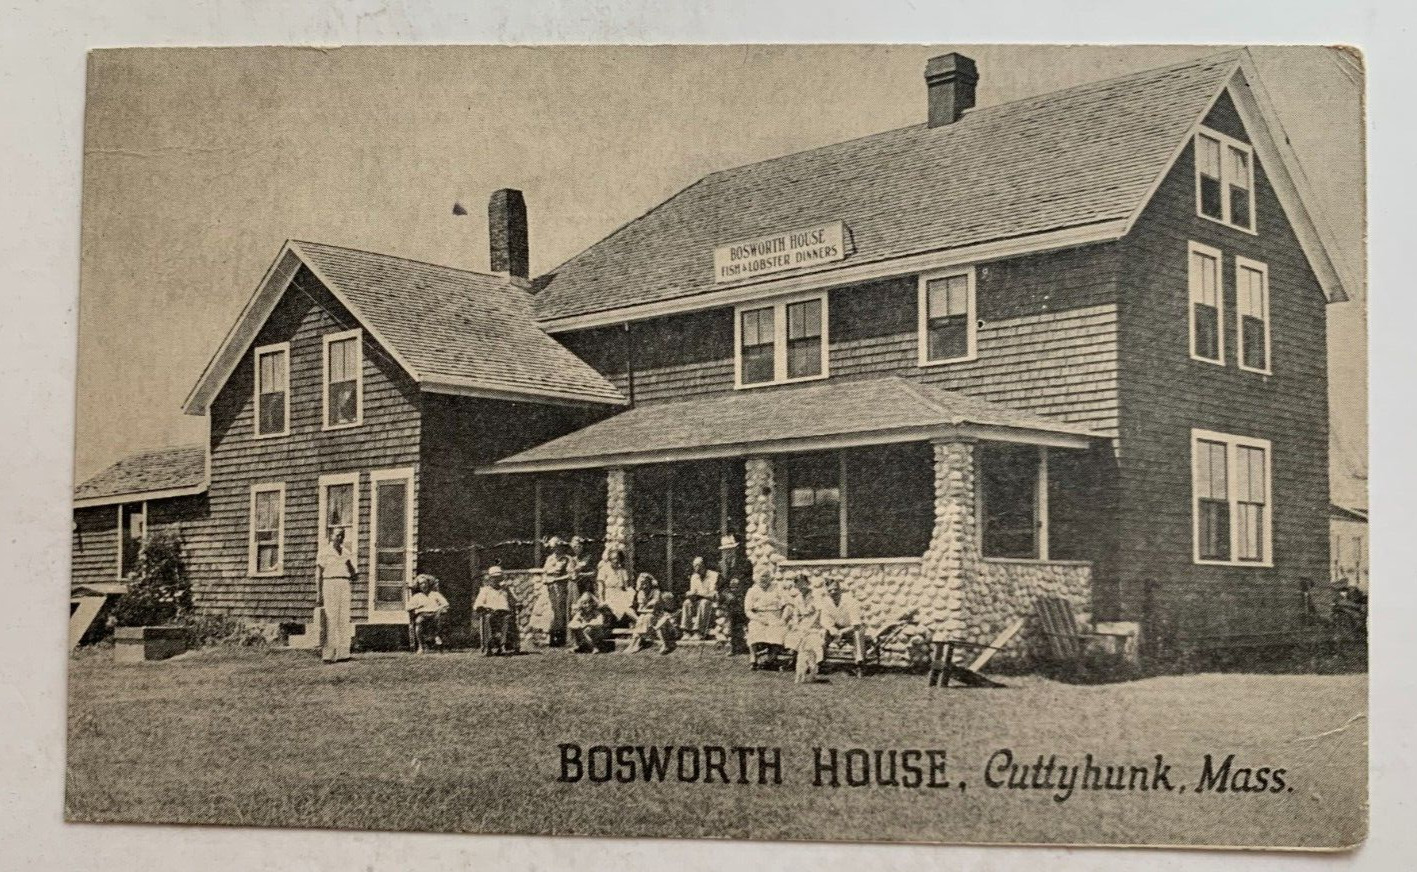 1938 MA Postcard Massachusetts Cuttyhunk Island Bosworth House restaurant people